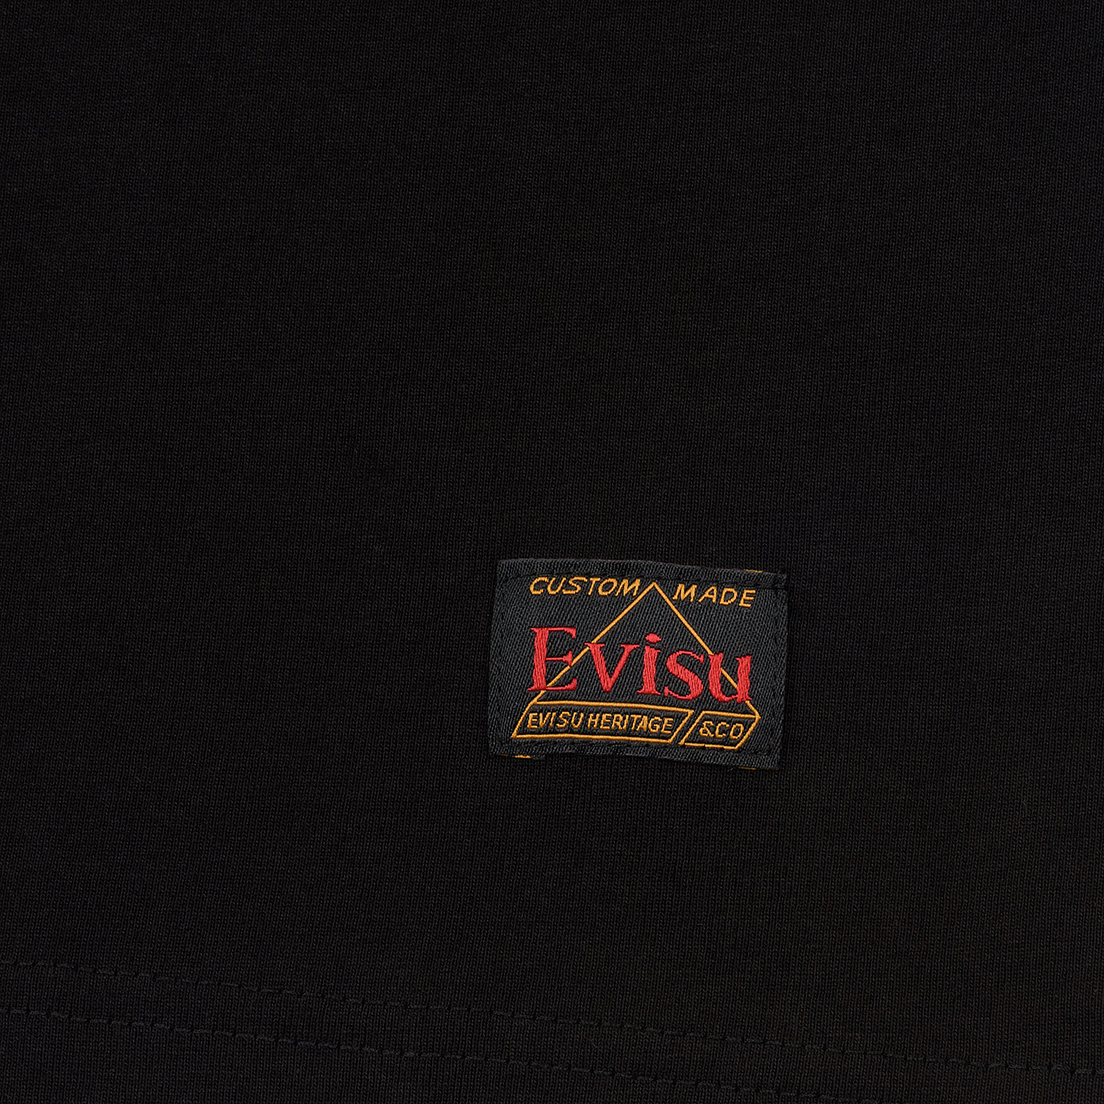 Evisu Мужская футболка Heritage Camo Evisu Branding Chest Print